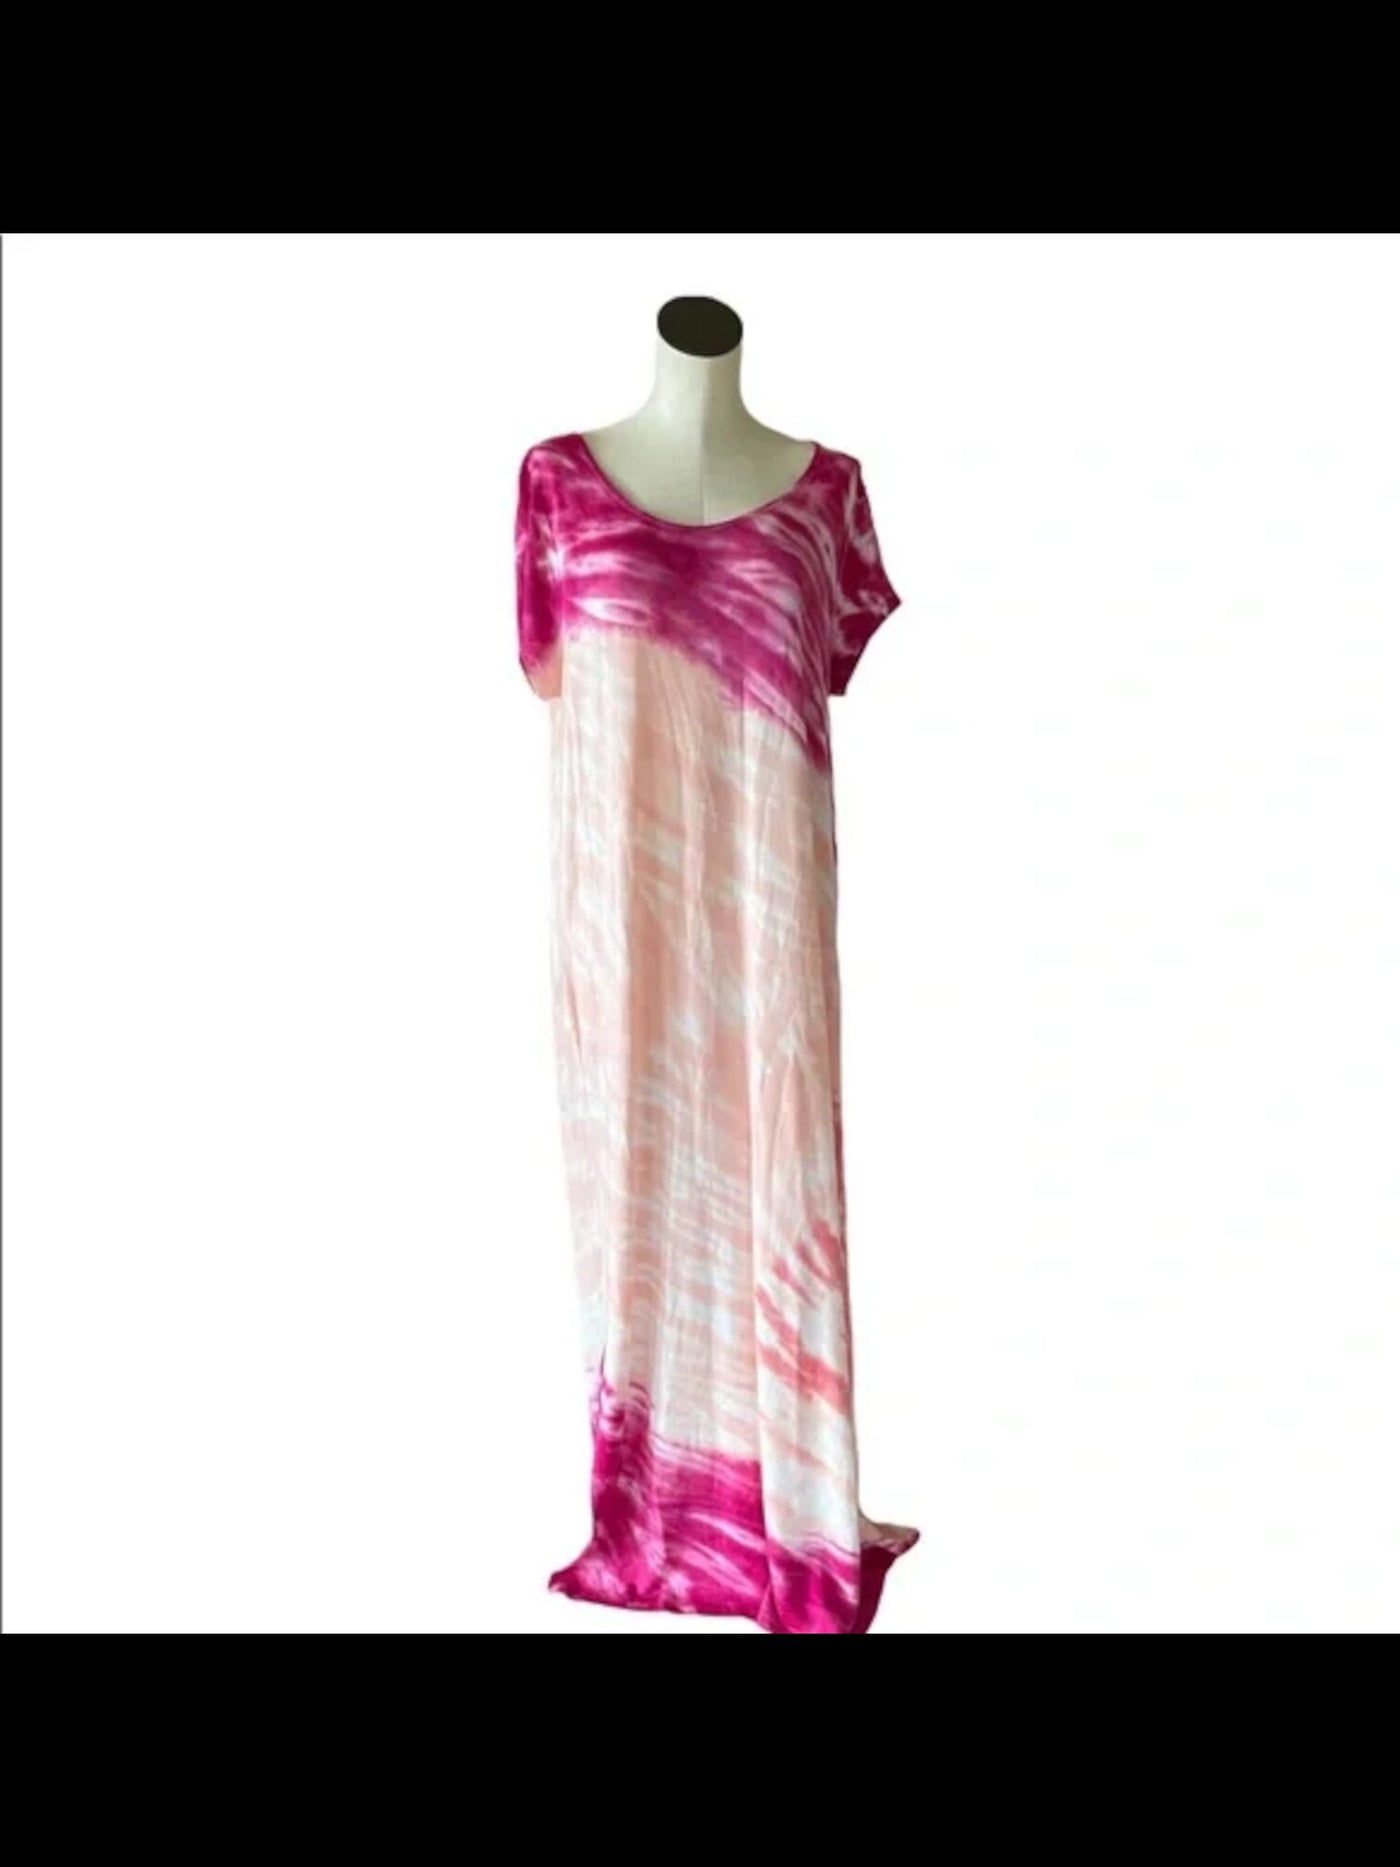 ADYSON PARKER Womens Pink Tie Dye Short Sleeve Scoop Neck Full-Length Shift Dress S